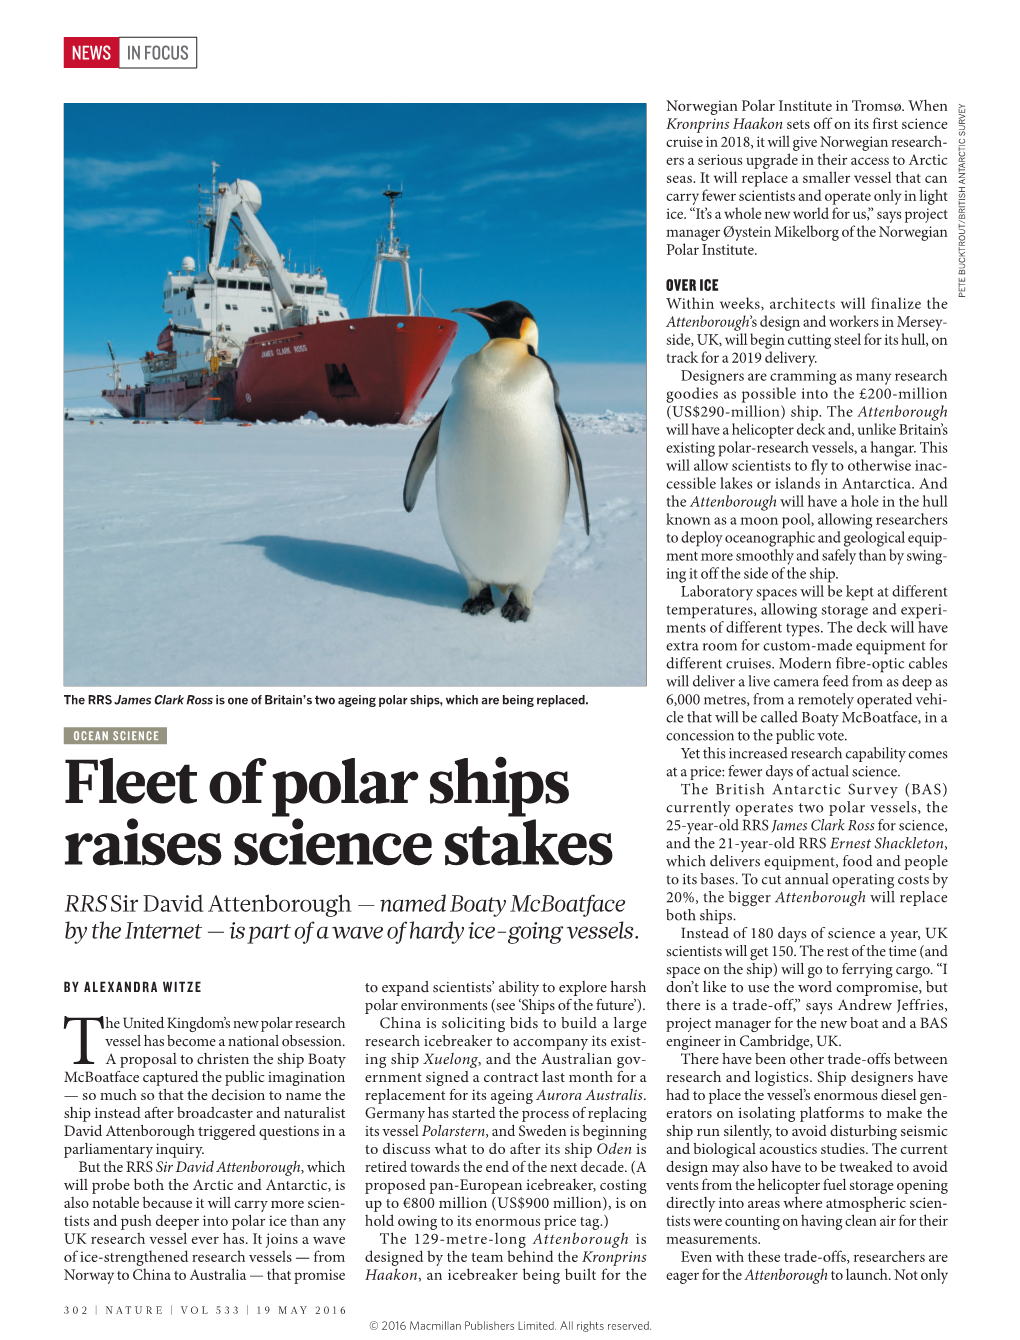 Fleet of Polar Ships Raises Science Stakes